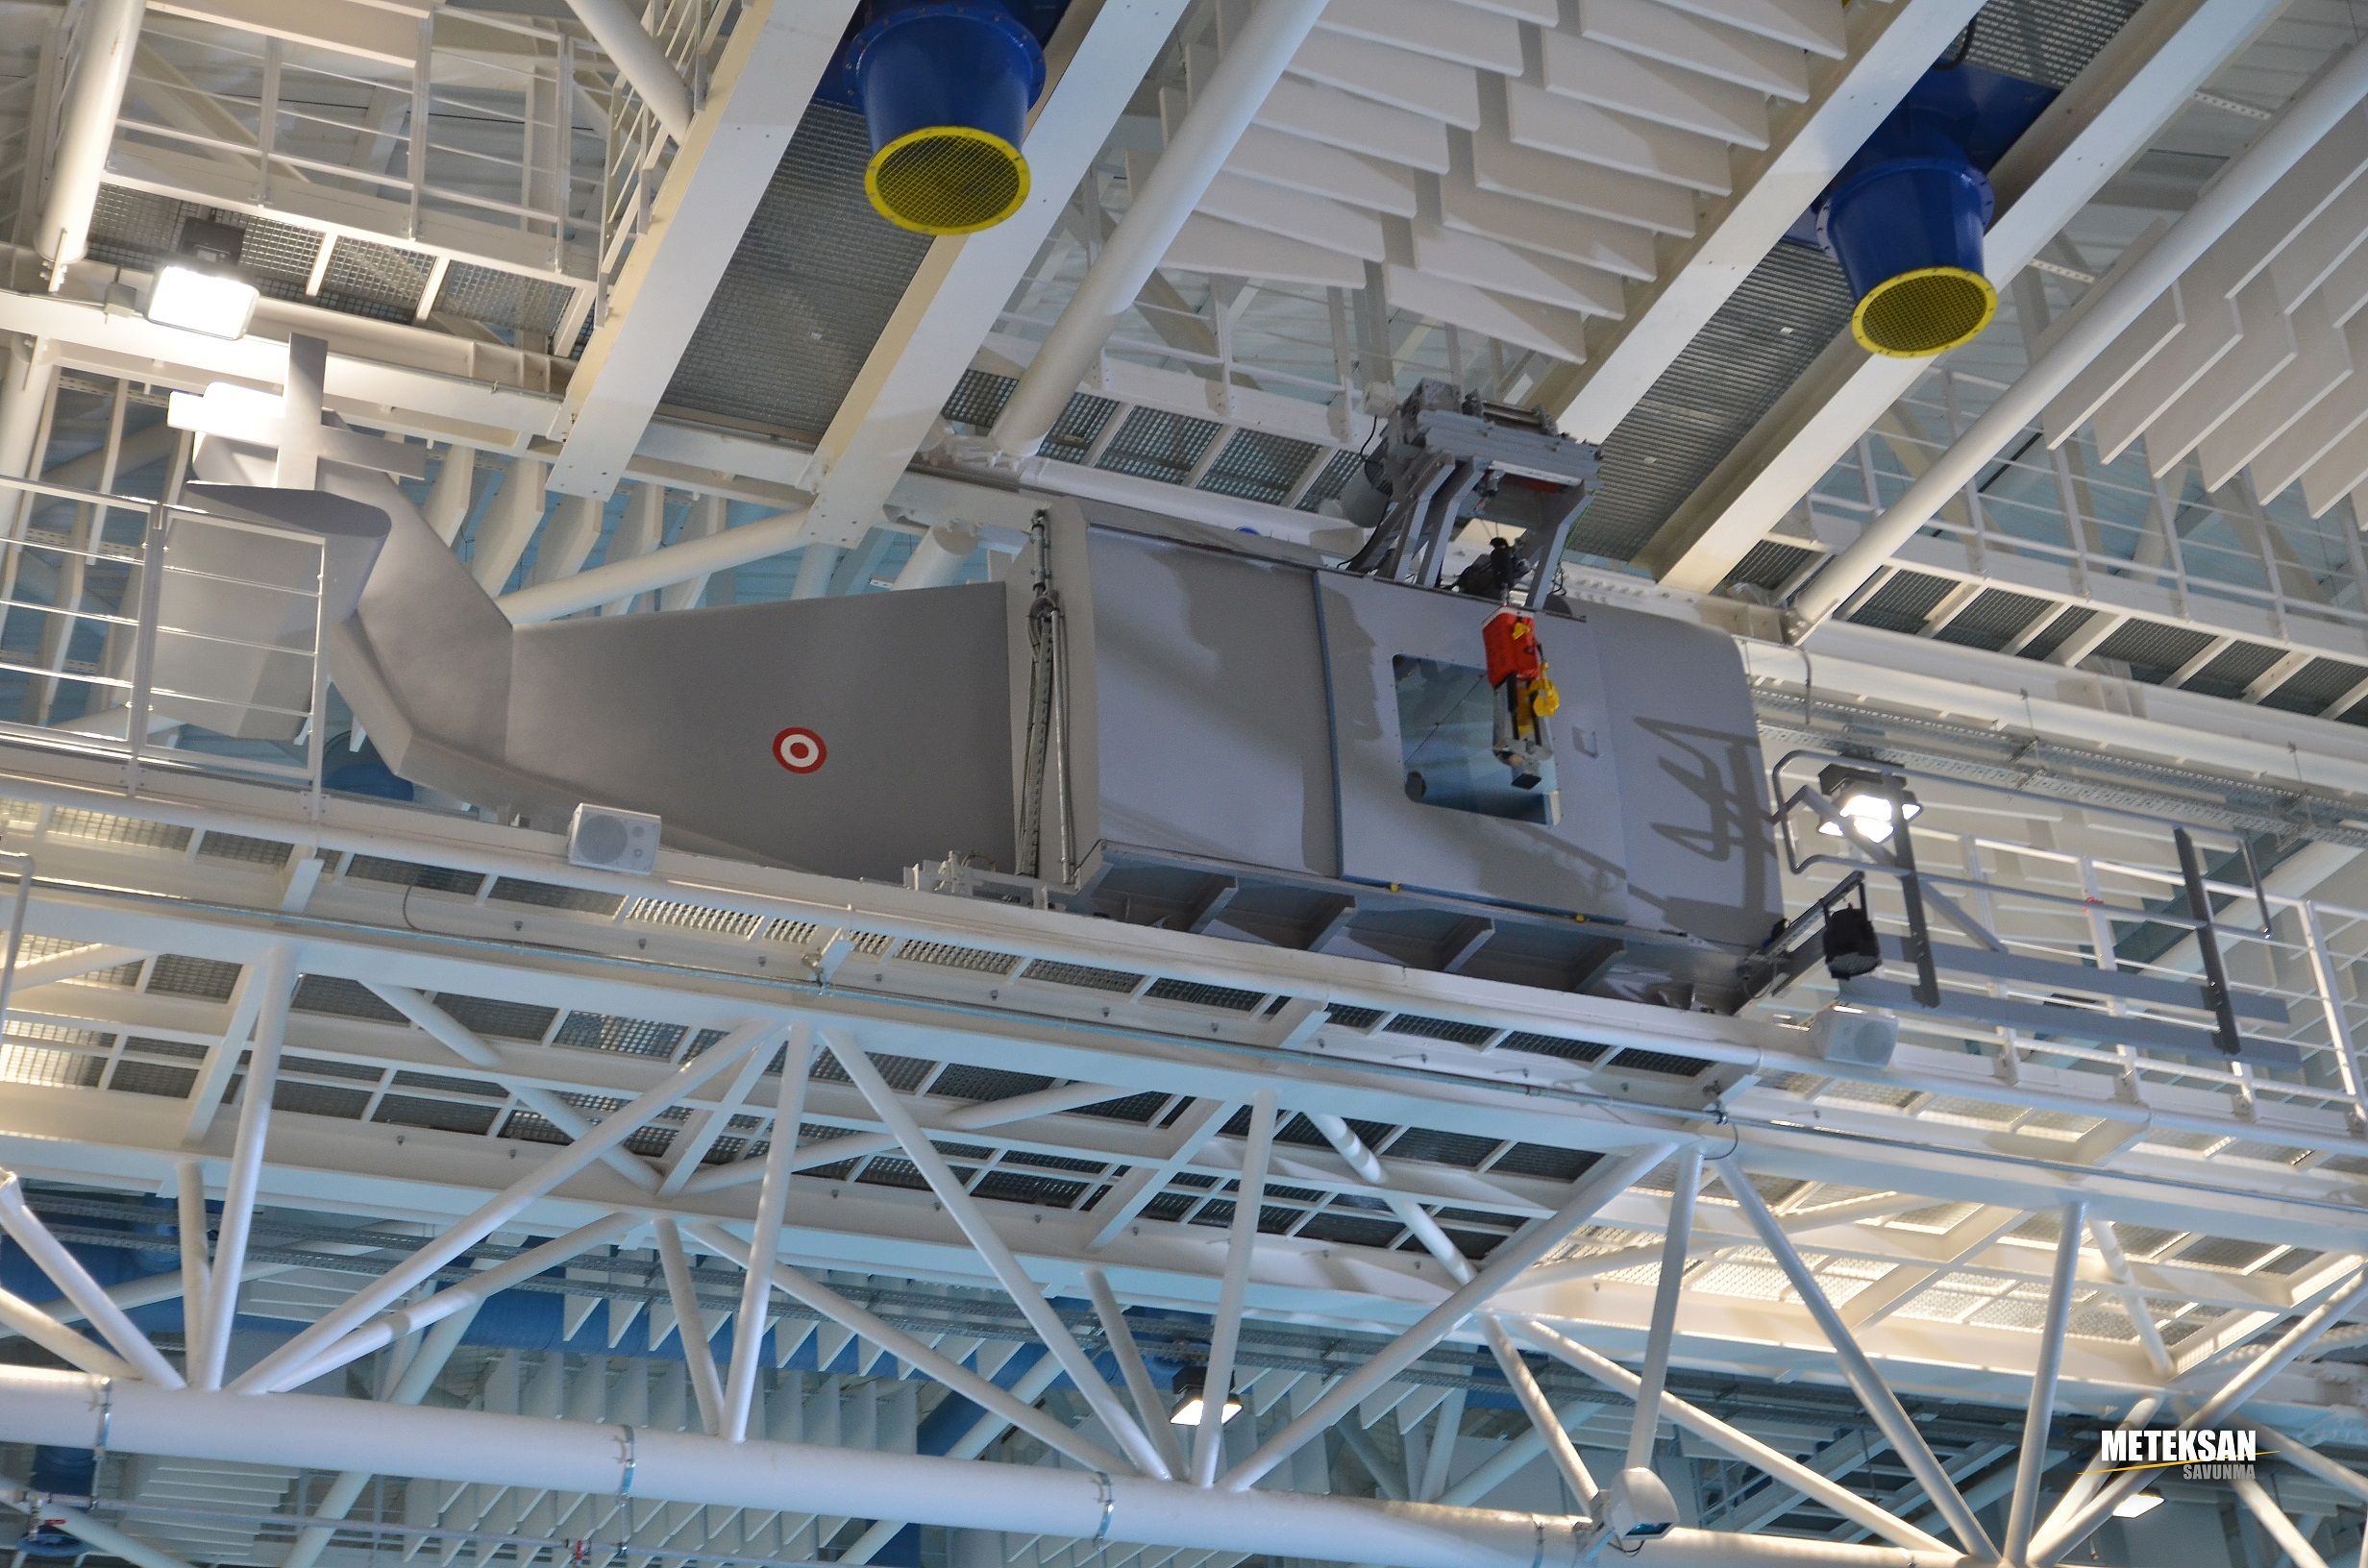 Meteksan Delivered the “HUET” Simulator to the Turkish Navy